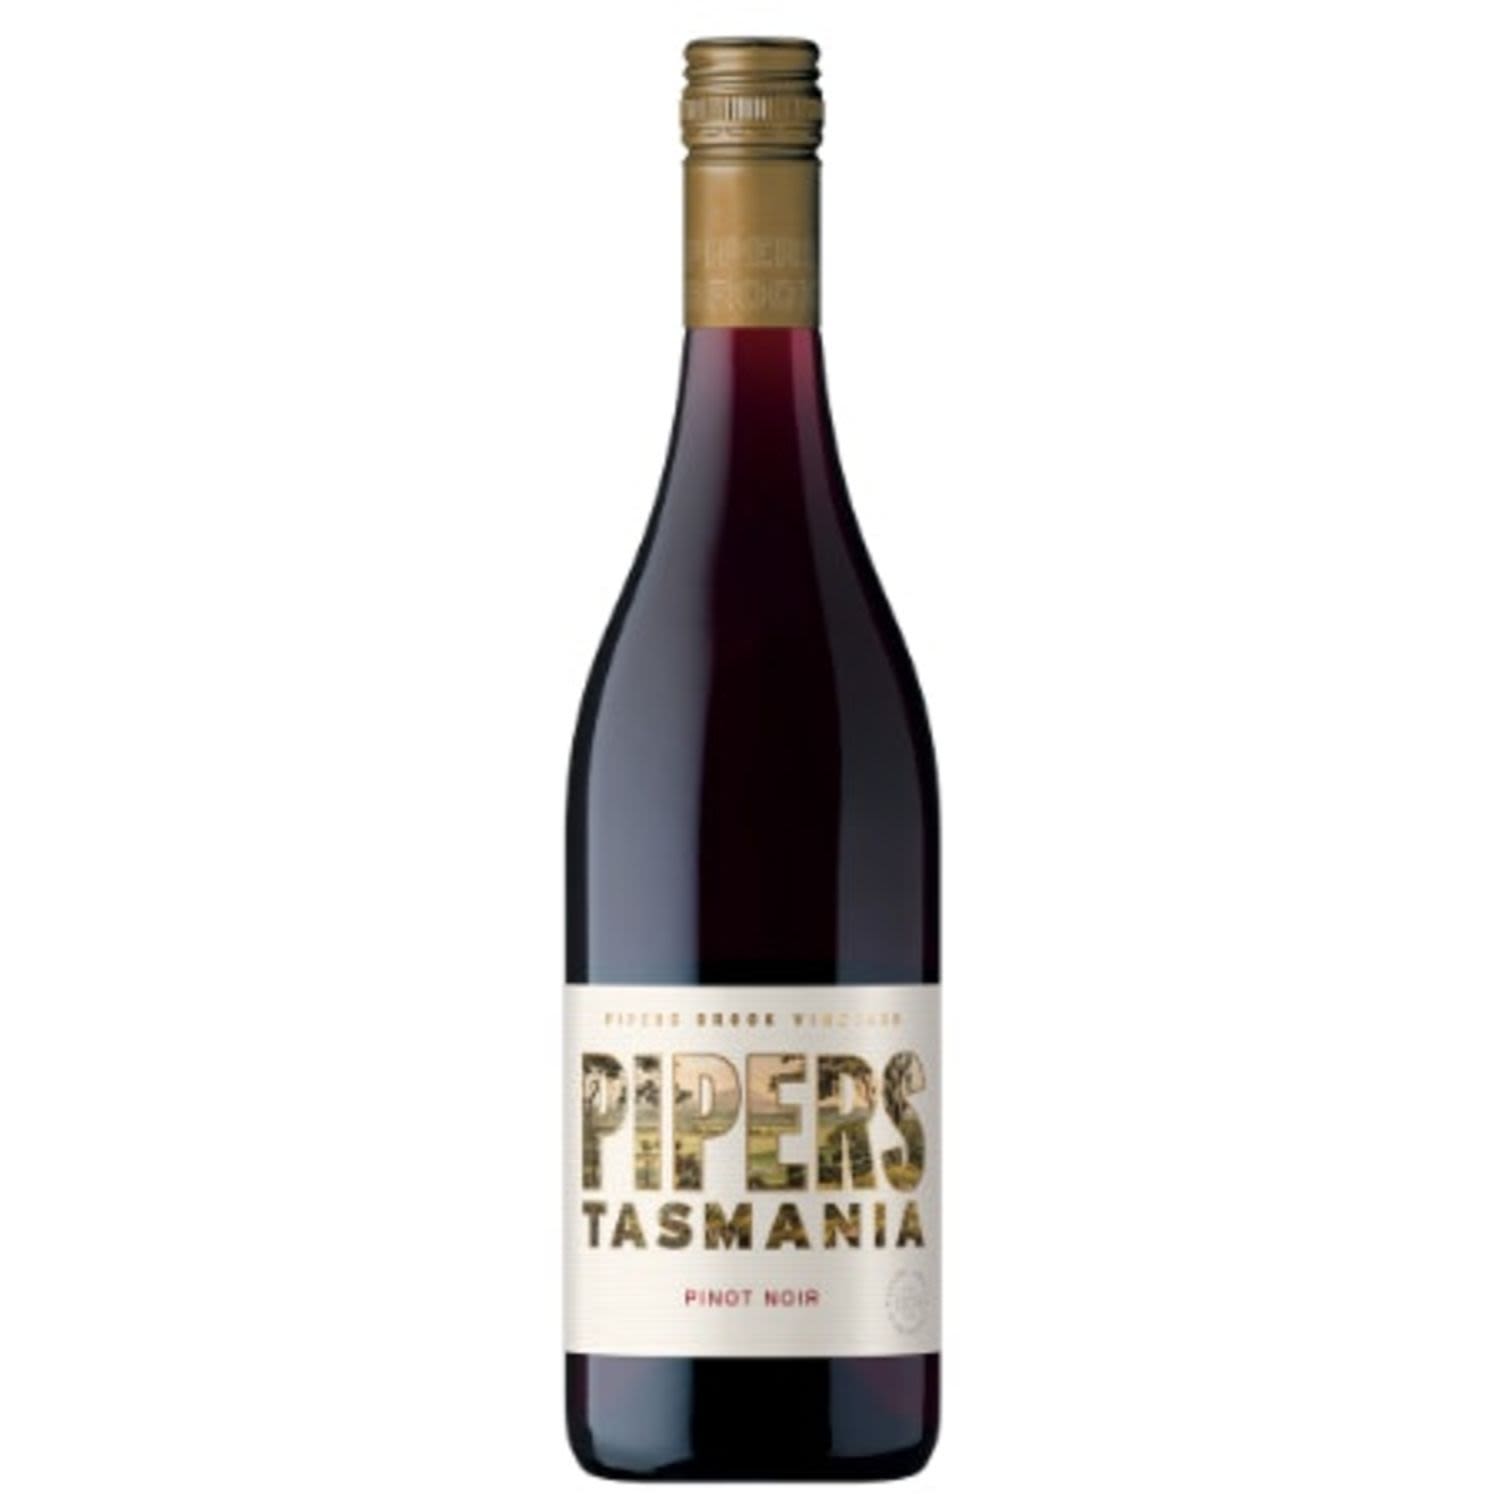 Pipers Tasmania Pinot Noir 750mL Bottle